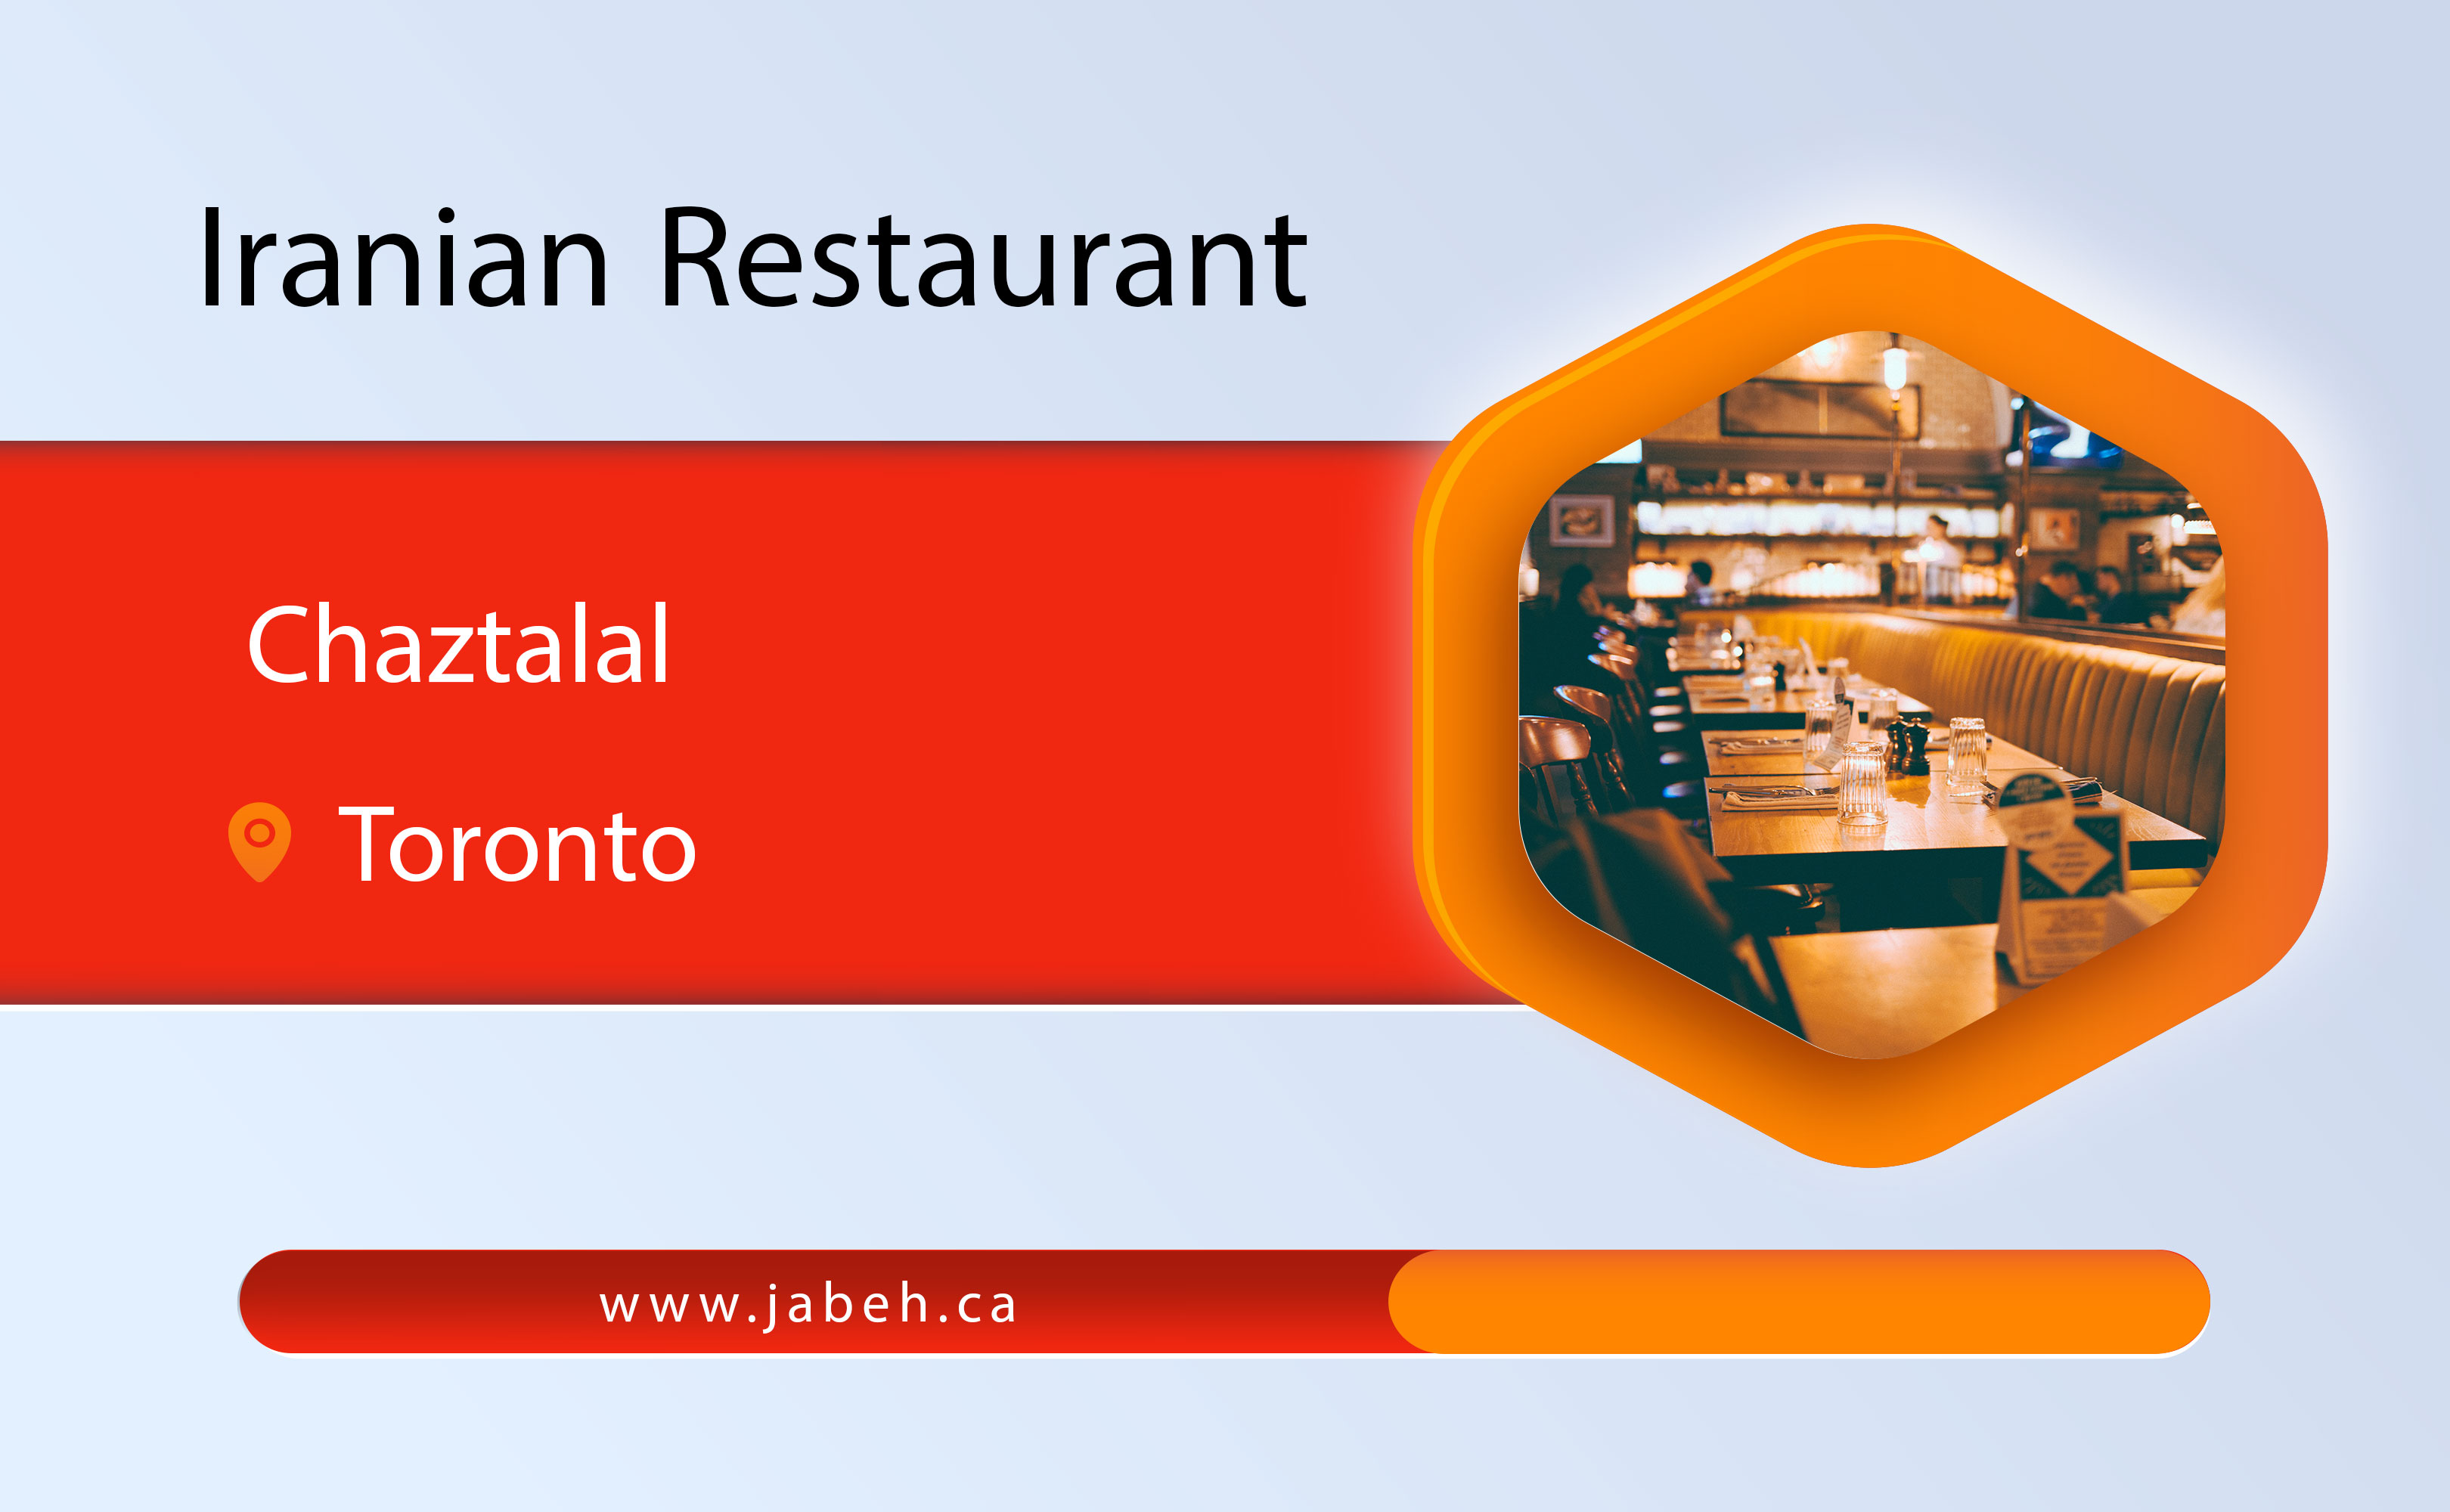 Chaztalal Iranian restaurant in Toronto